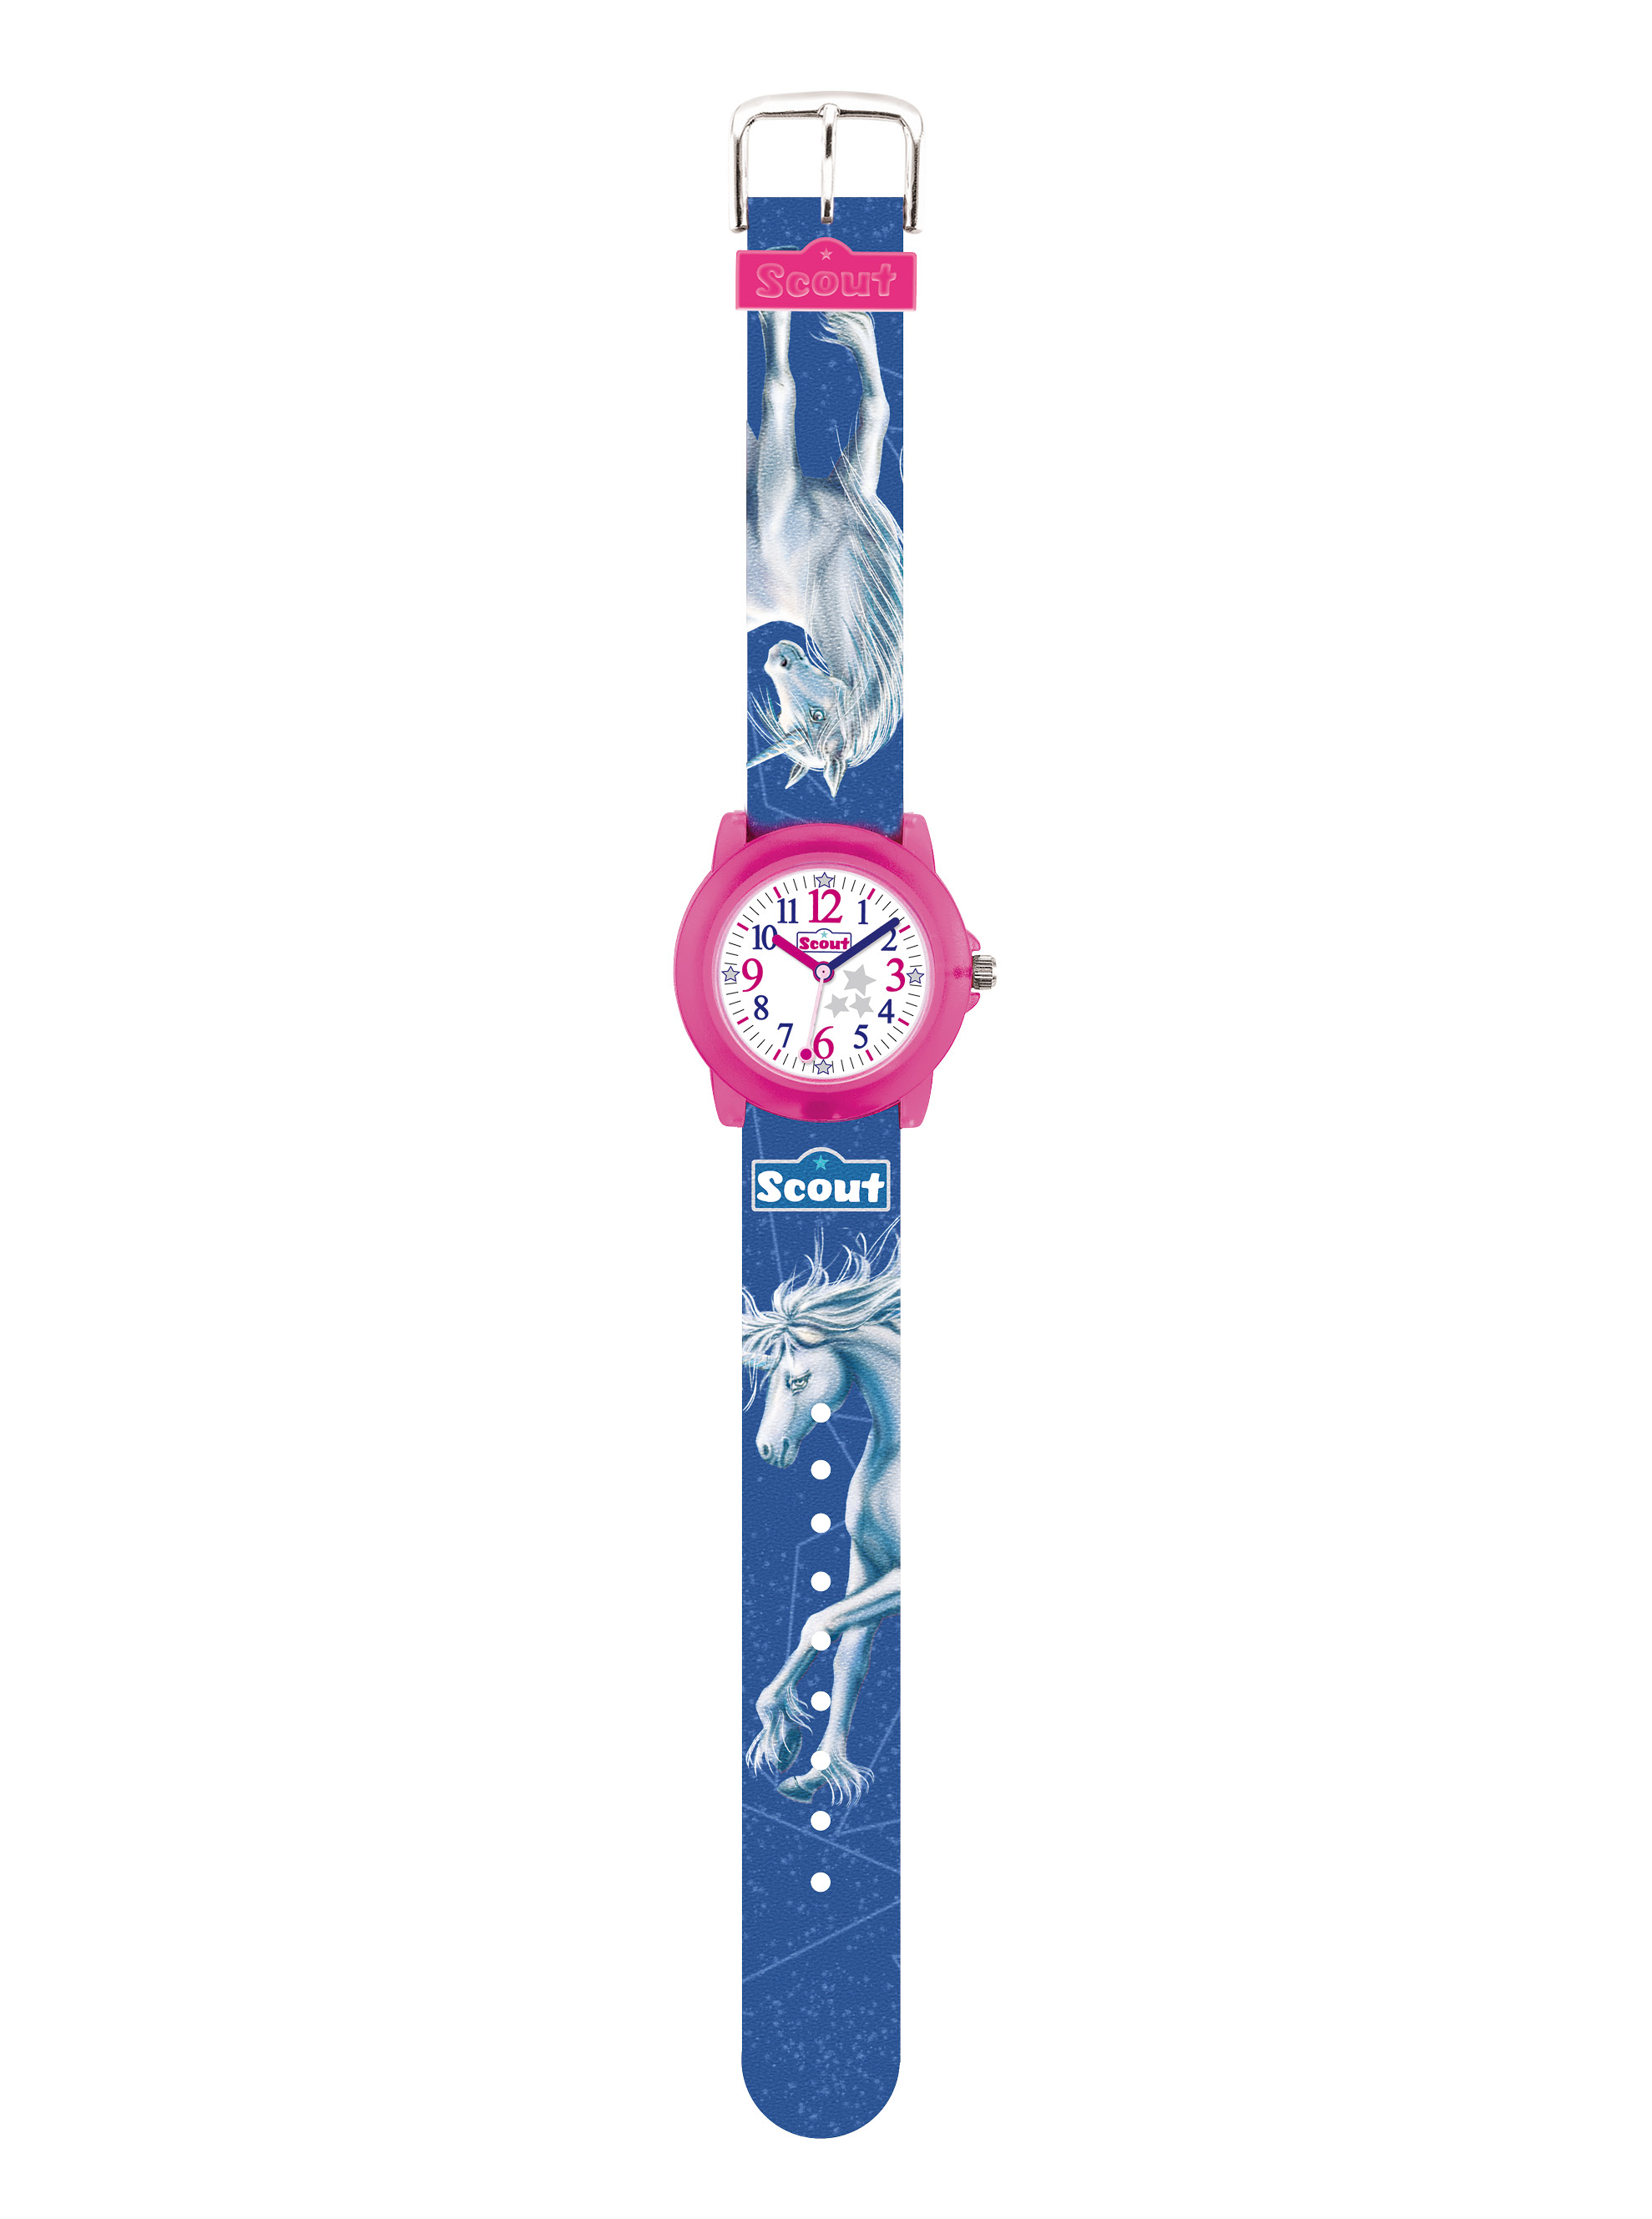 SCOUT Armbanduhr blau-lila